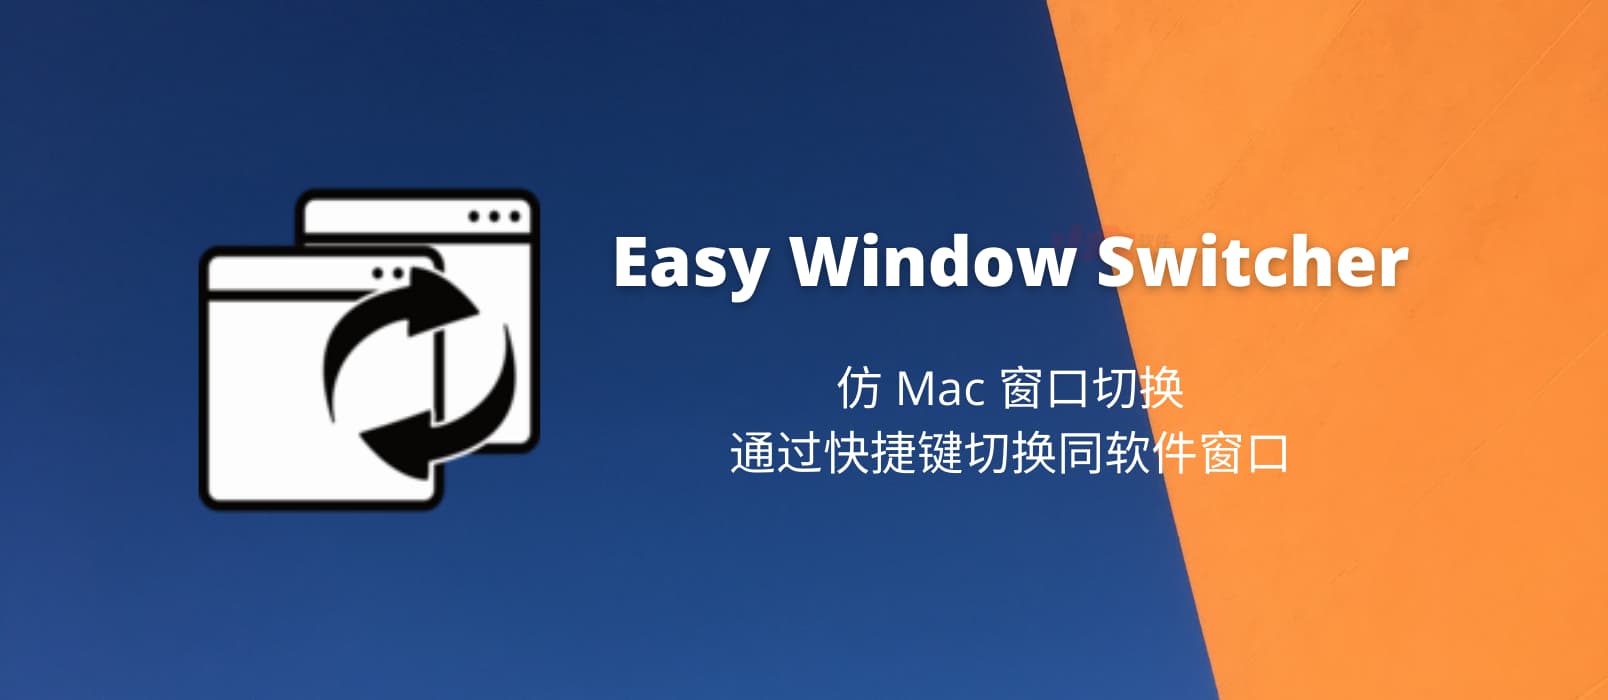 Easy Window Switcher - 仿 Mac 窗口切换，通过快捷键切换同软件窗口[Windows]